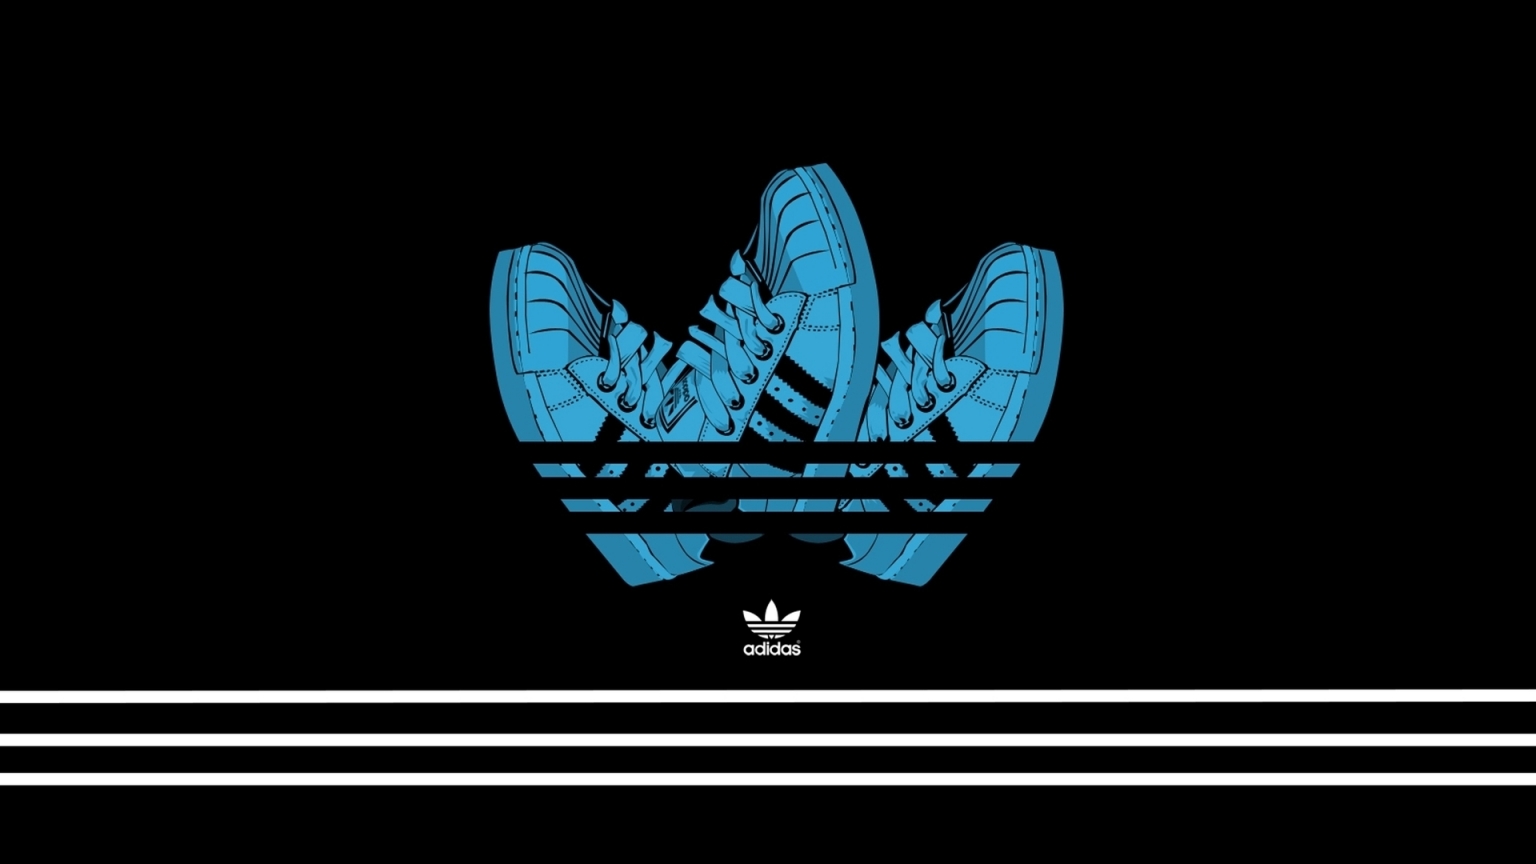 Adidas Creative Logo Design for 1536 x 864 HDTV resolution